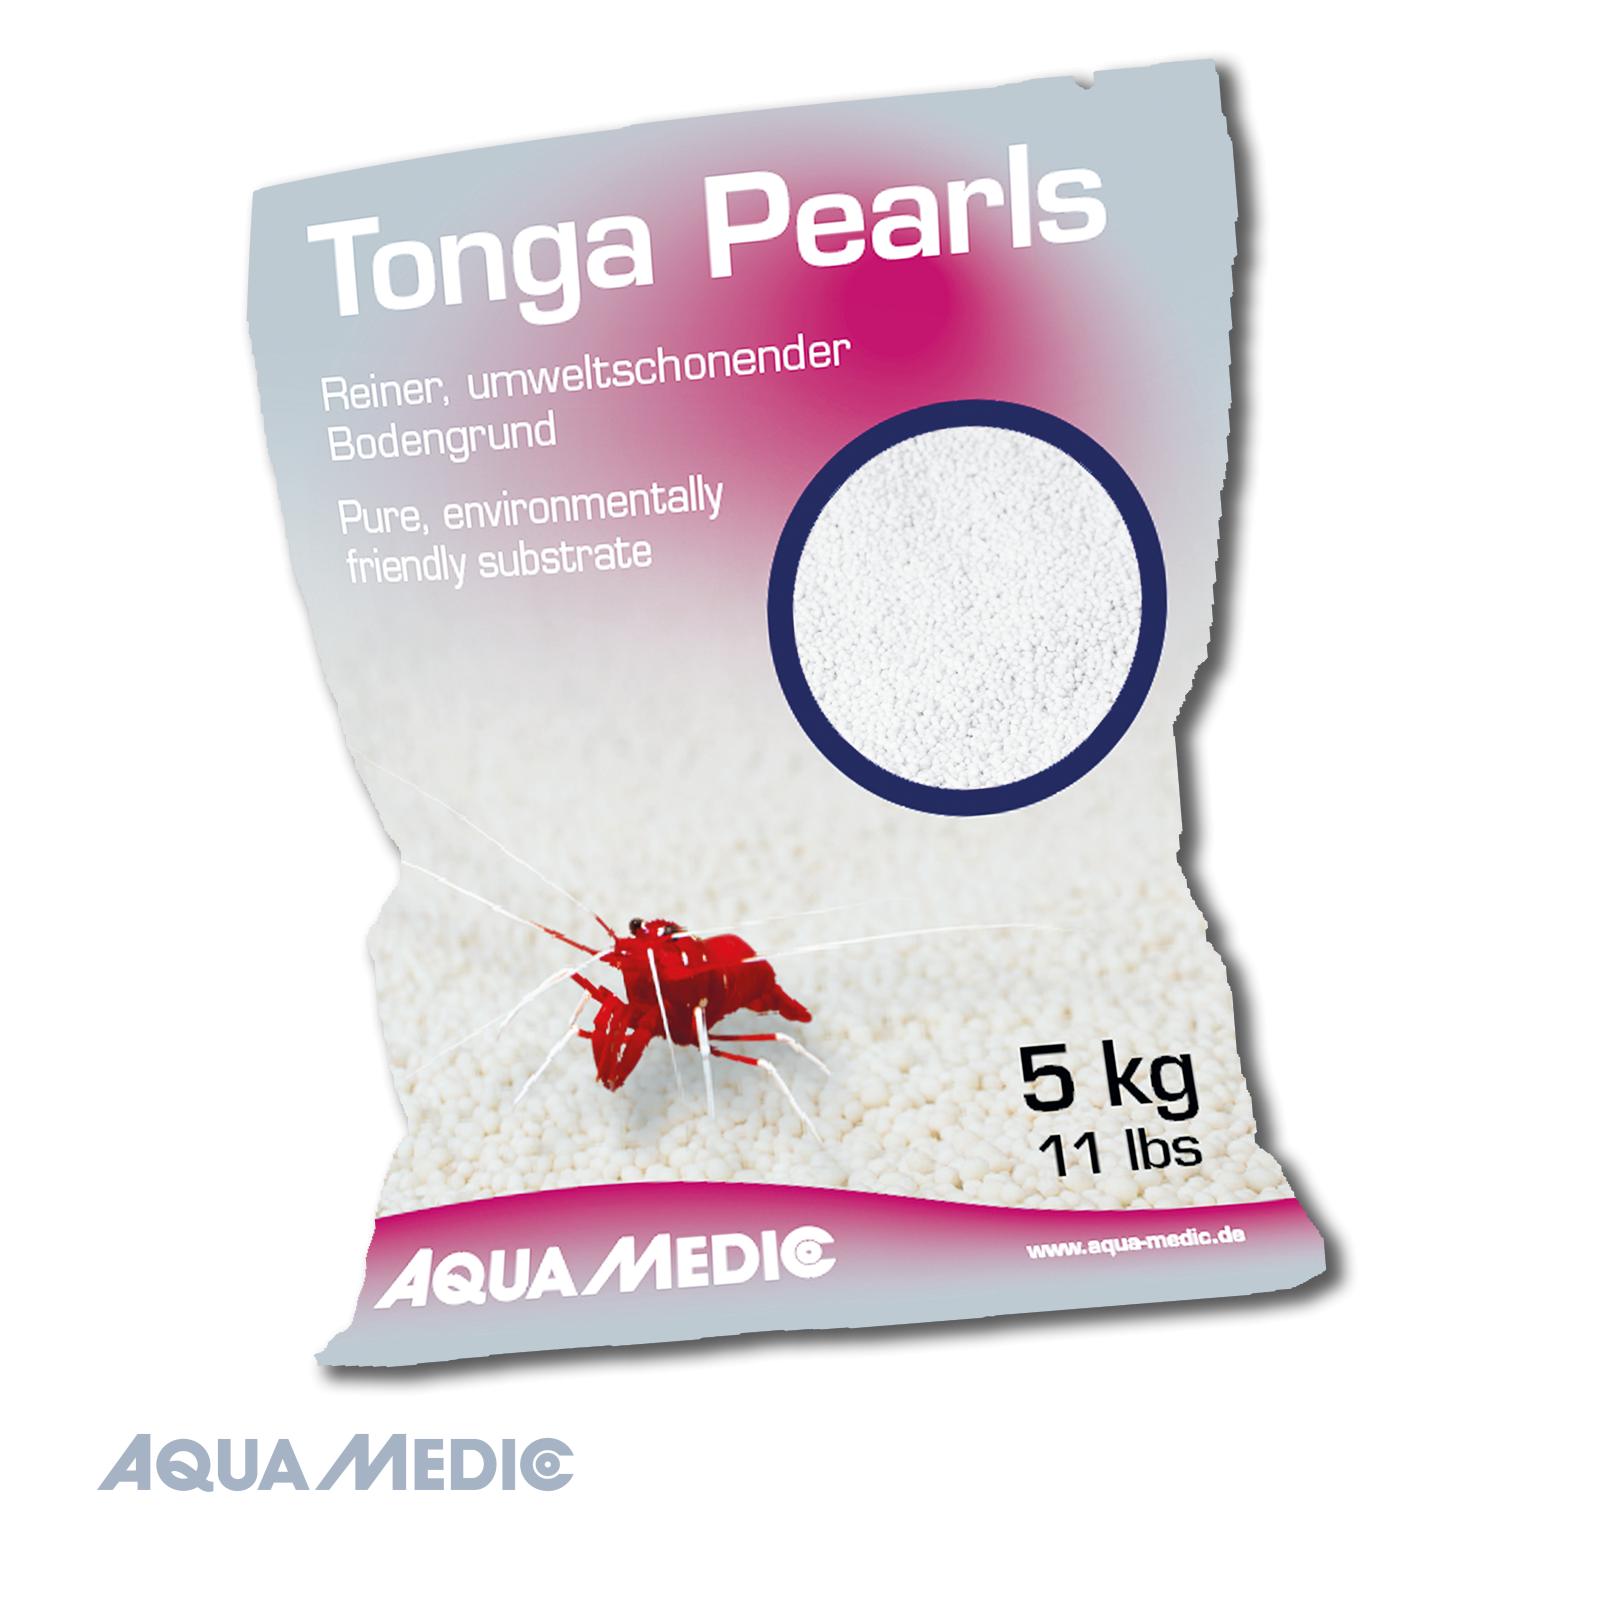 Aqua Medic tonga pearls